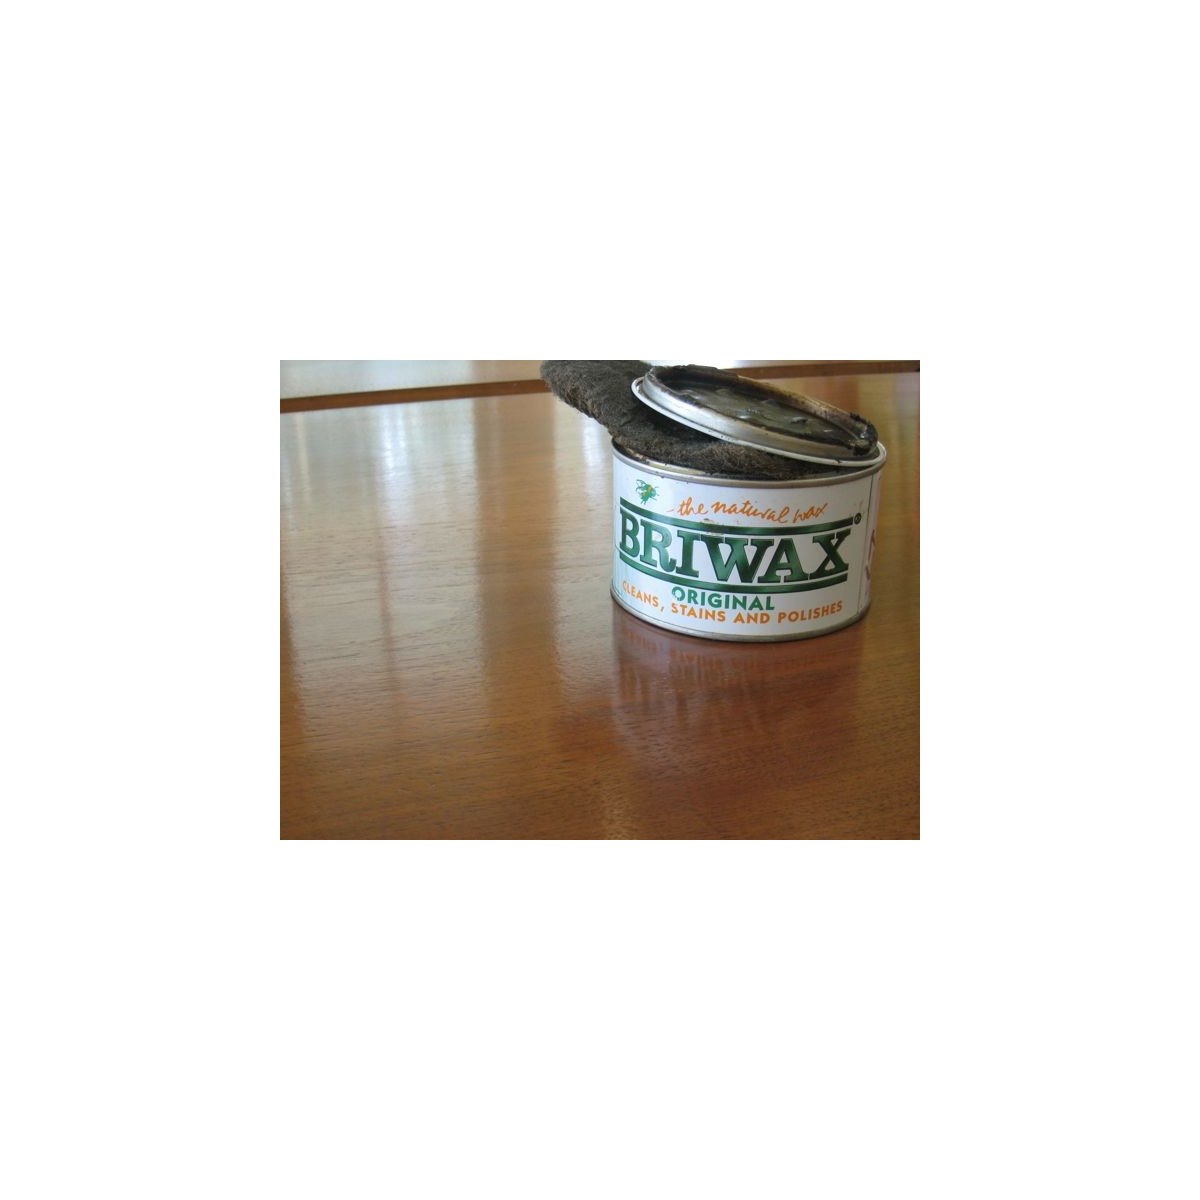 Briwax Original Wax Polish Stiockists